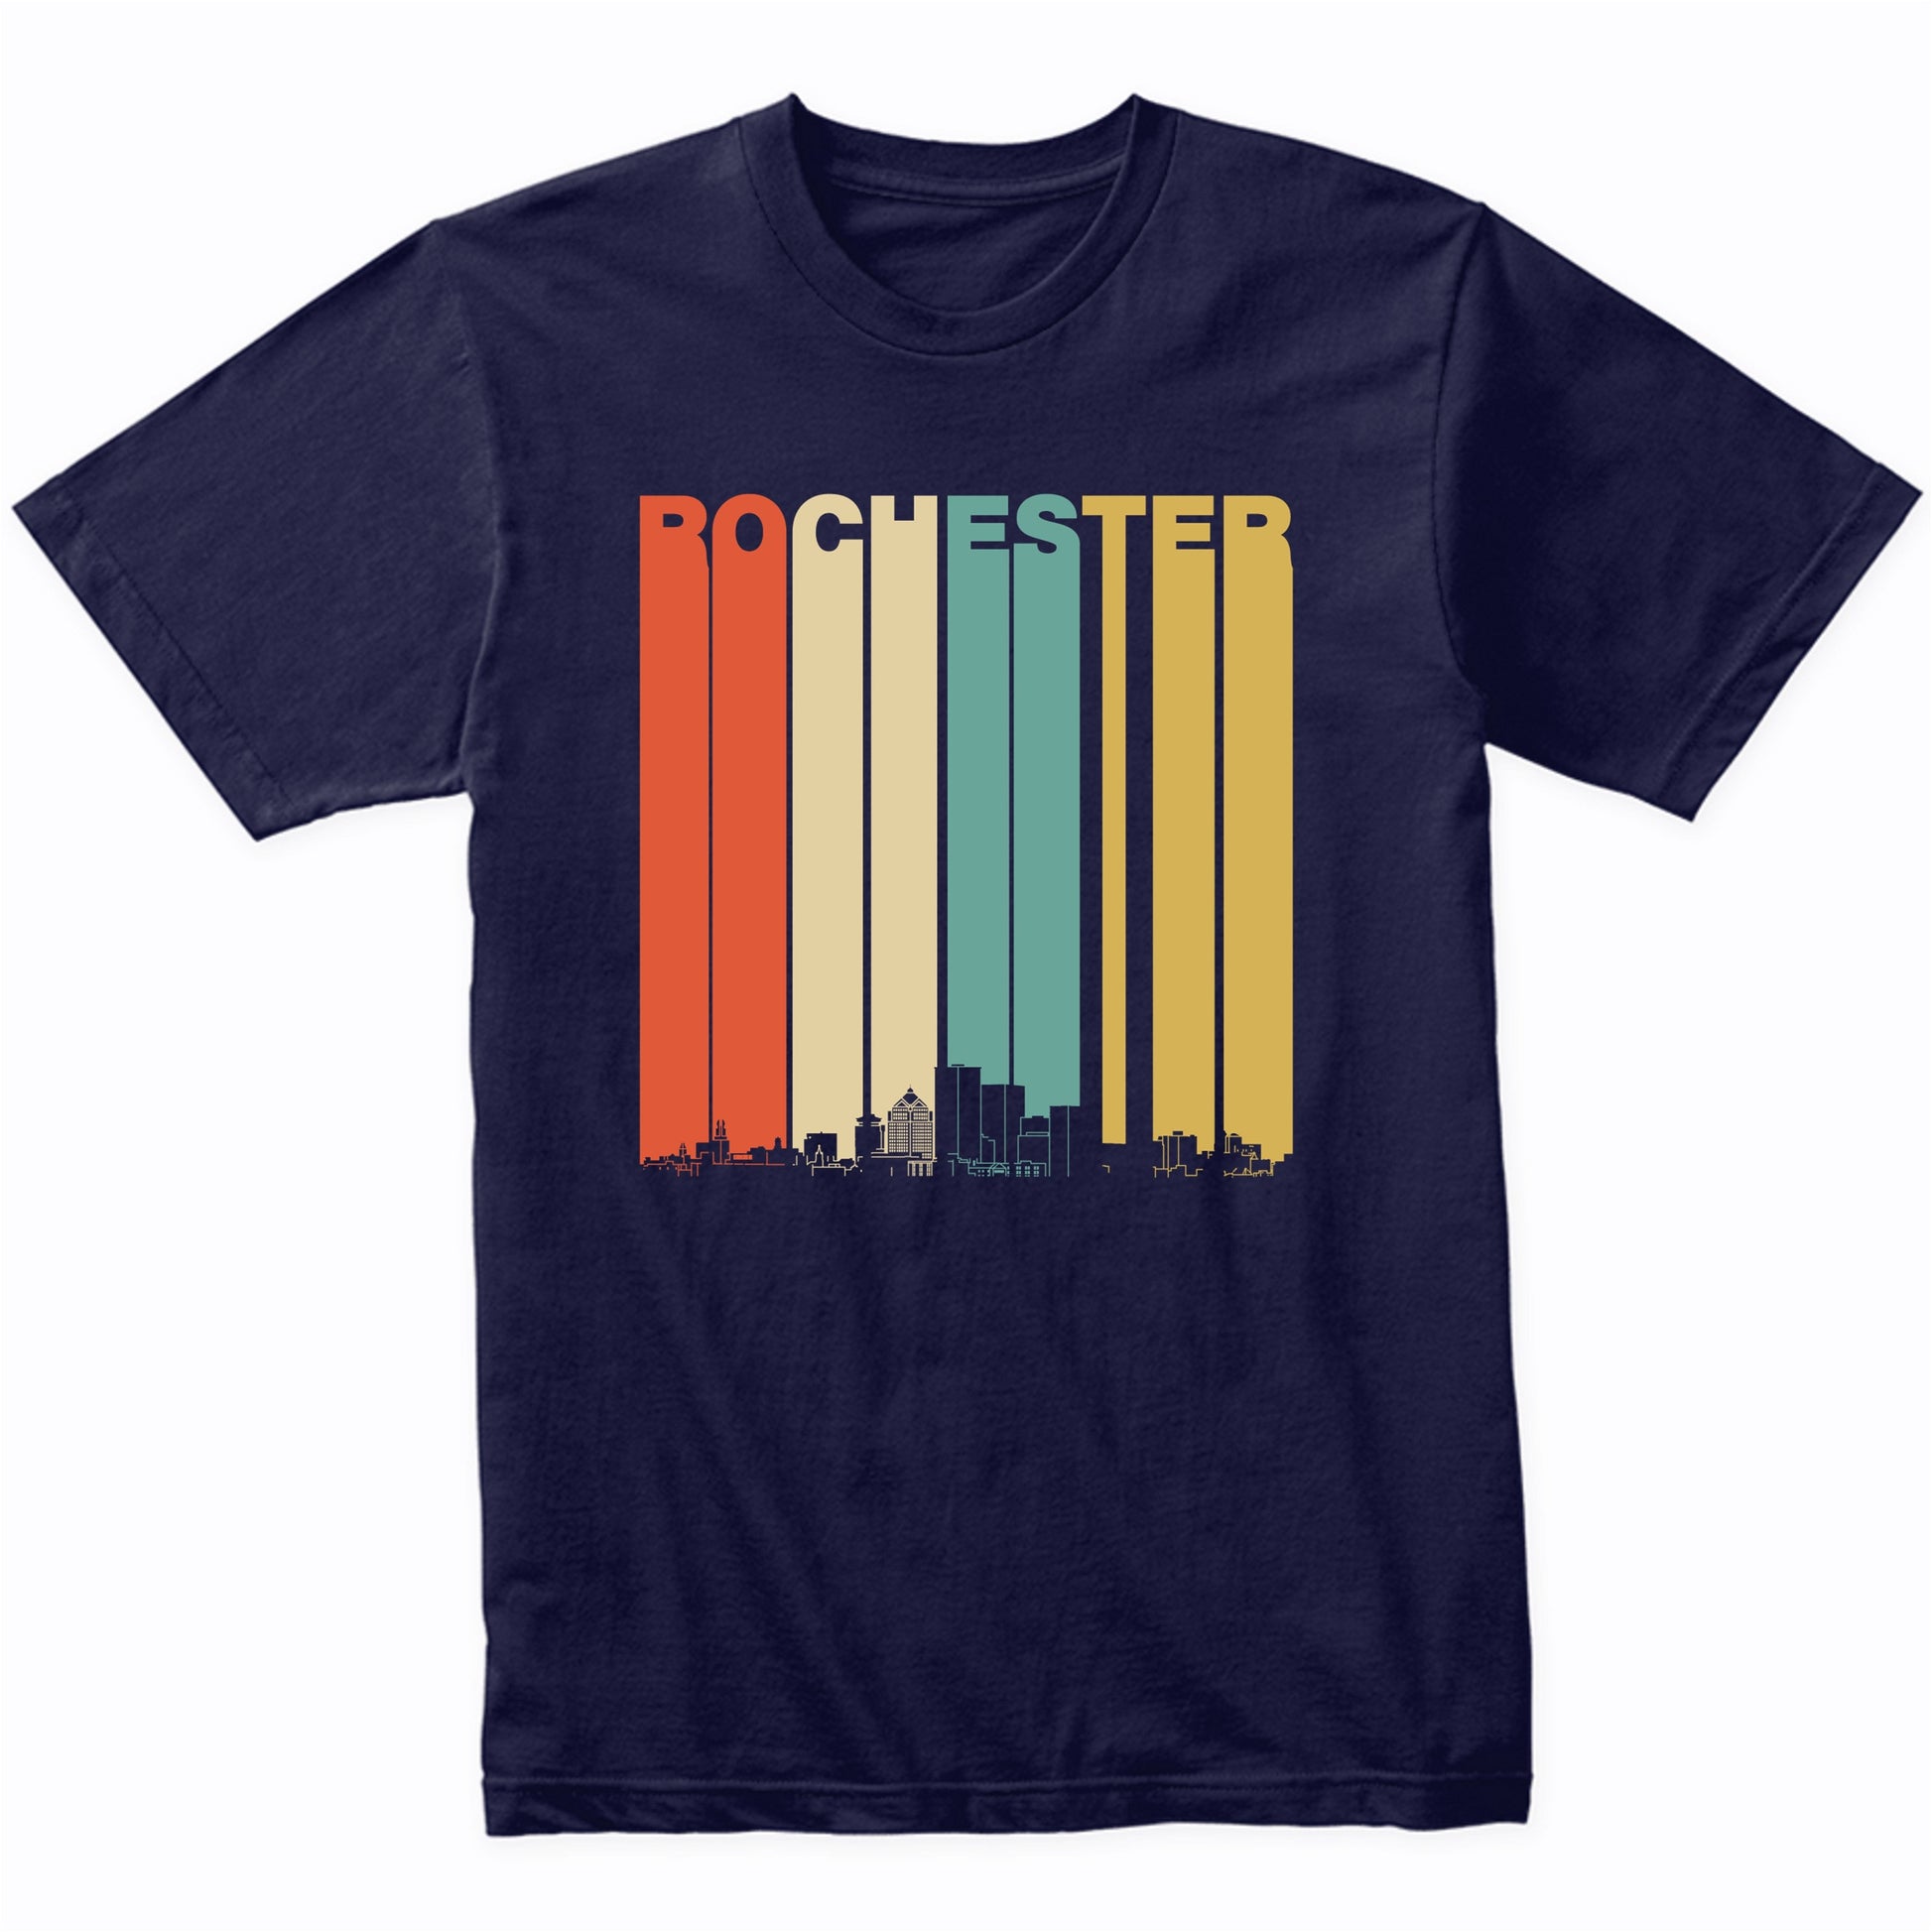 Vintage 1970's Style Rochester New York Skyline T-Shirt